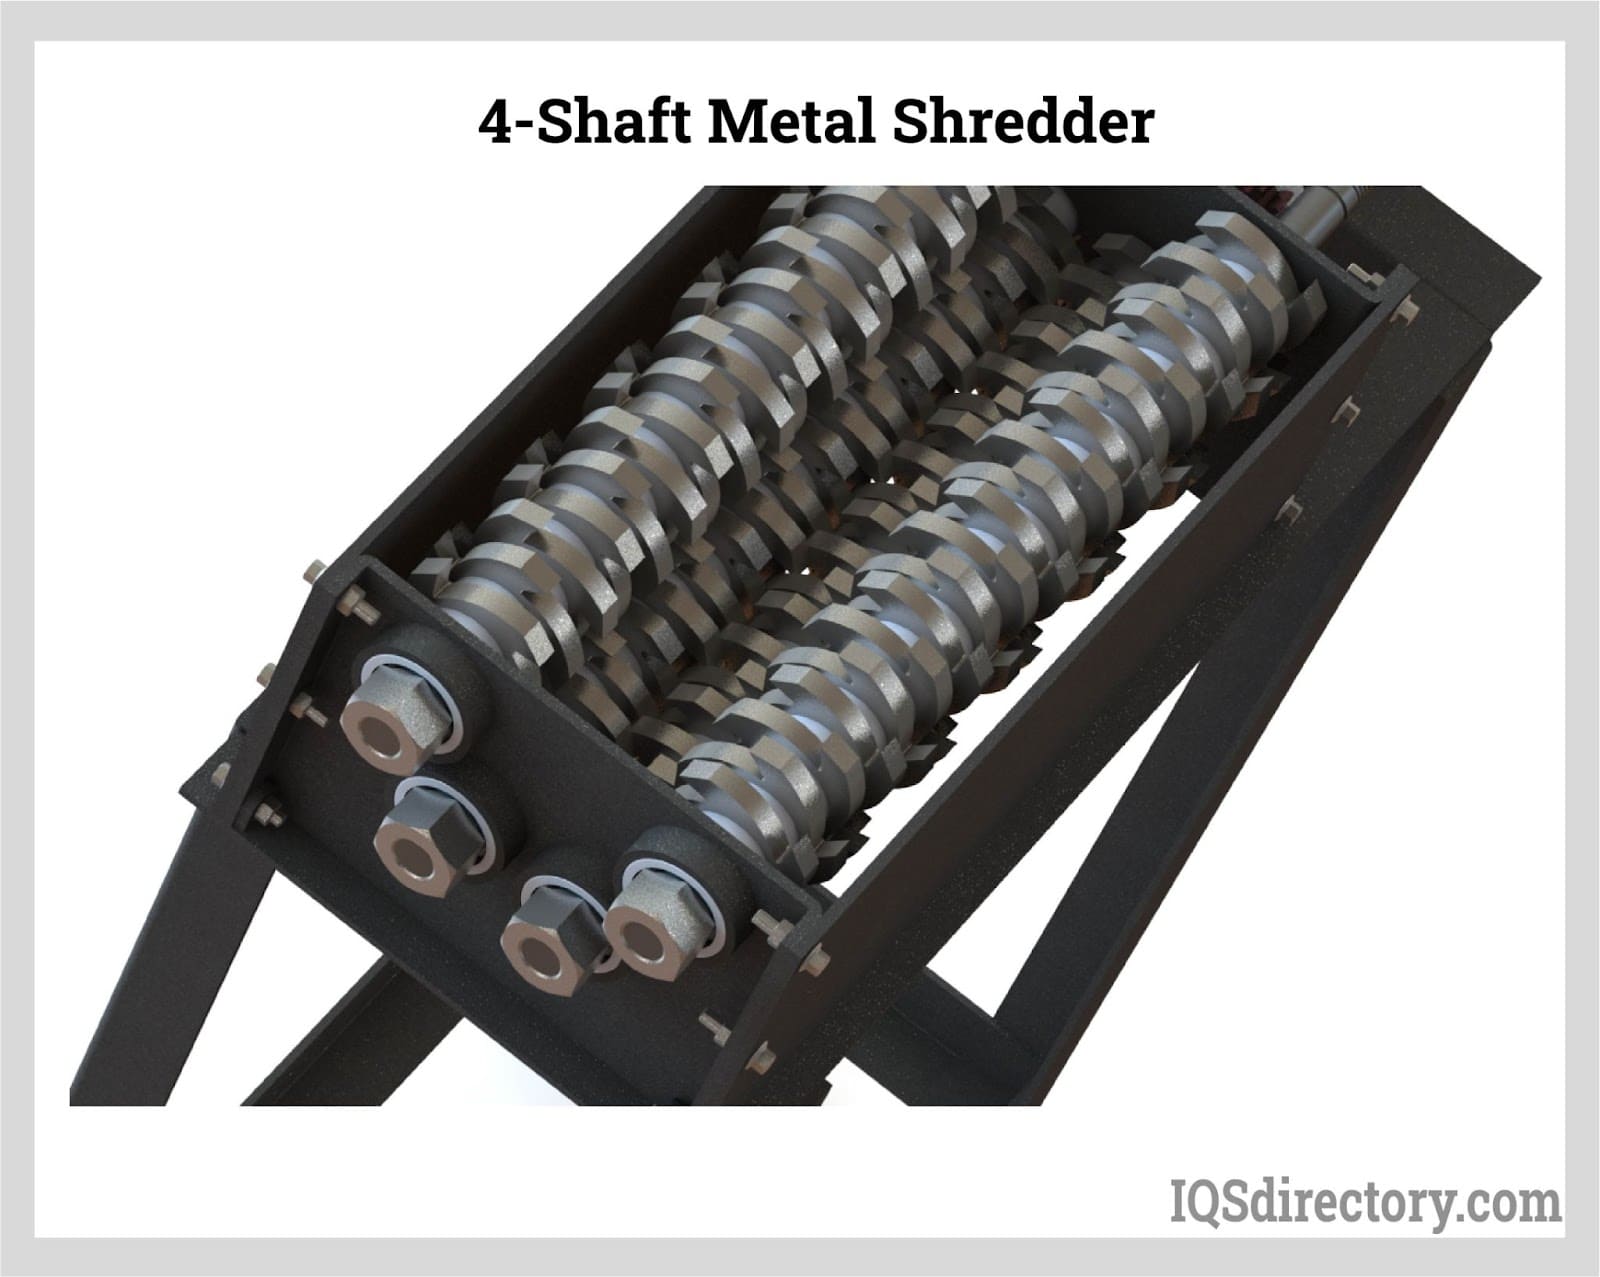 4-Shaft Metal Shredder